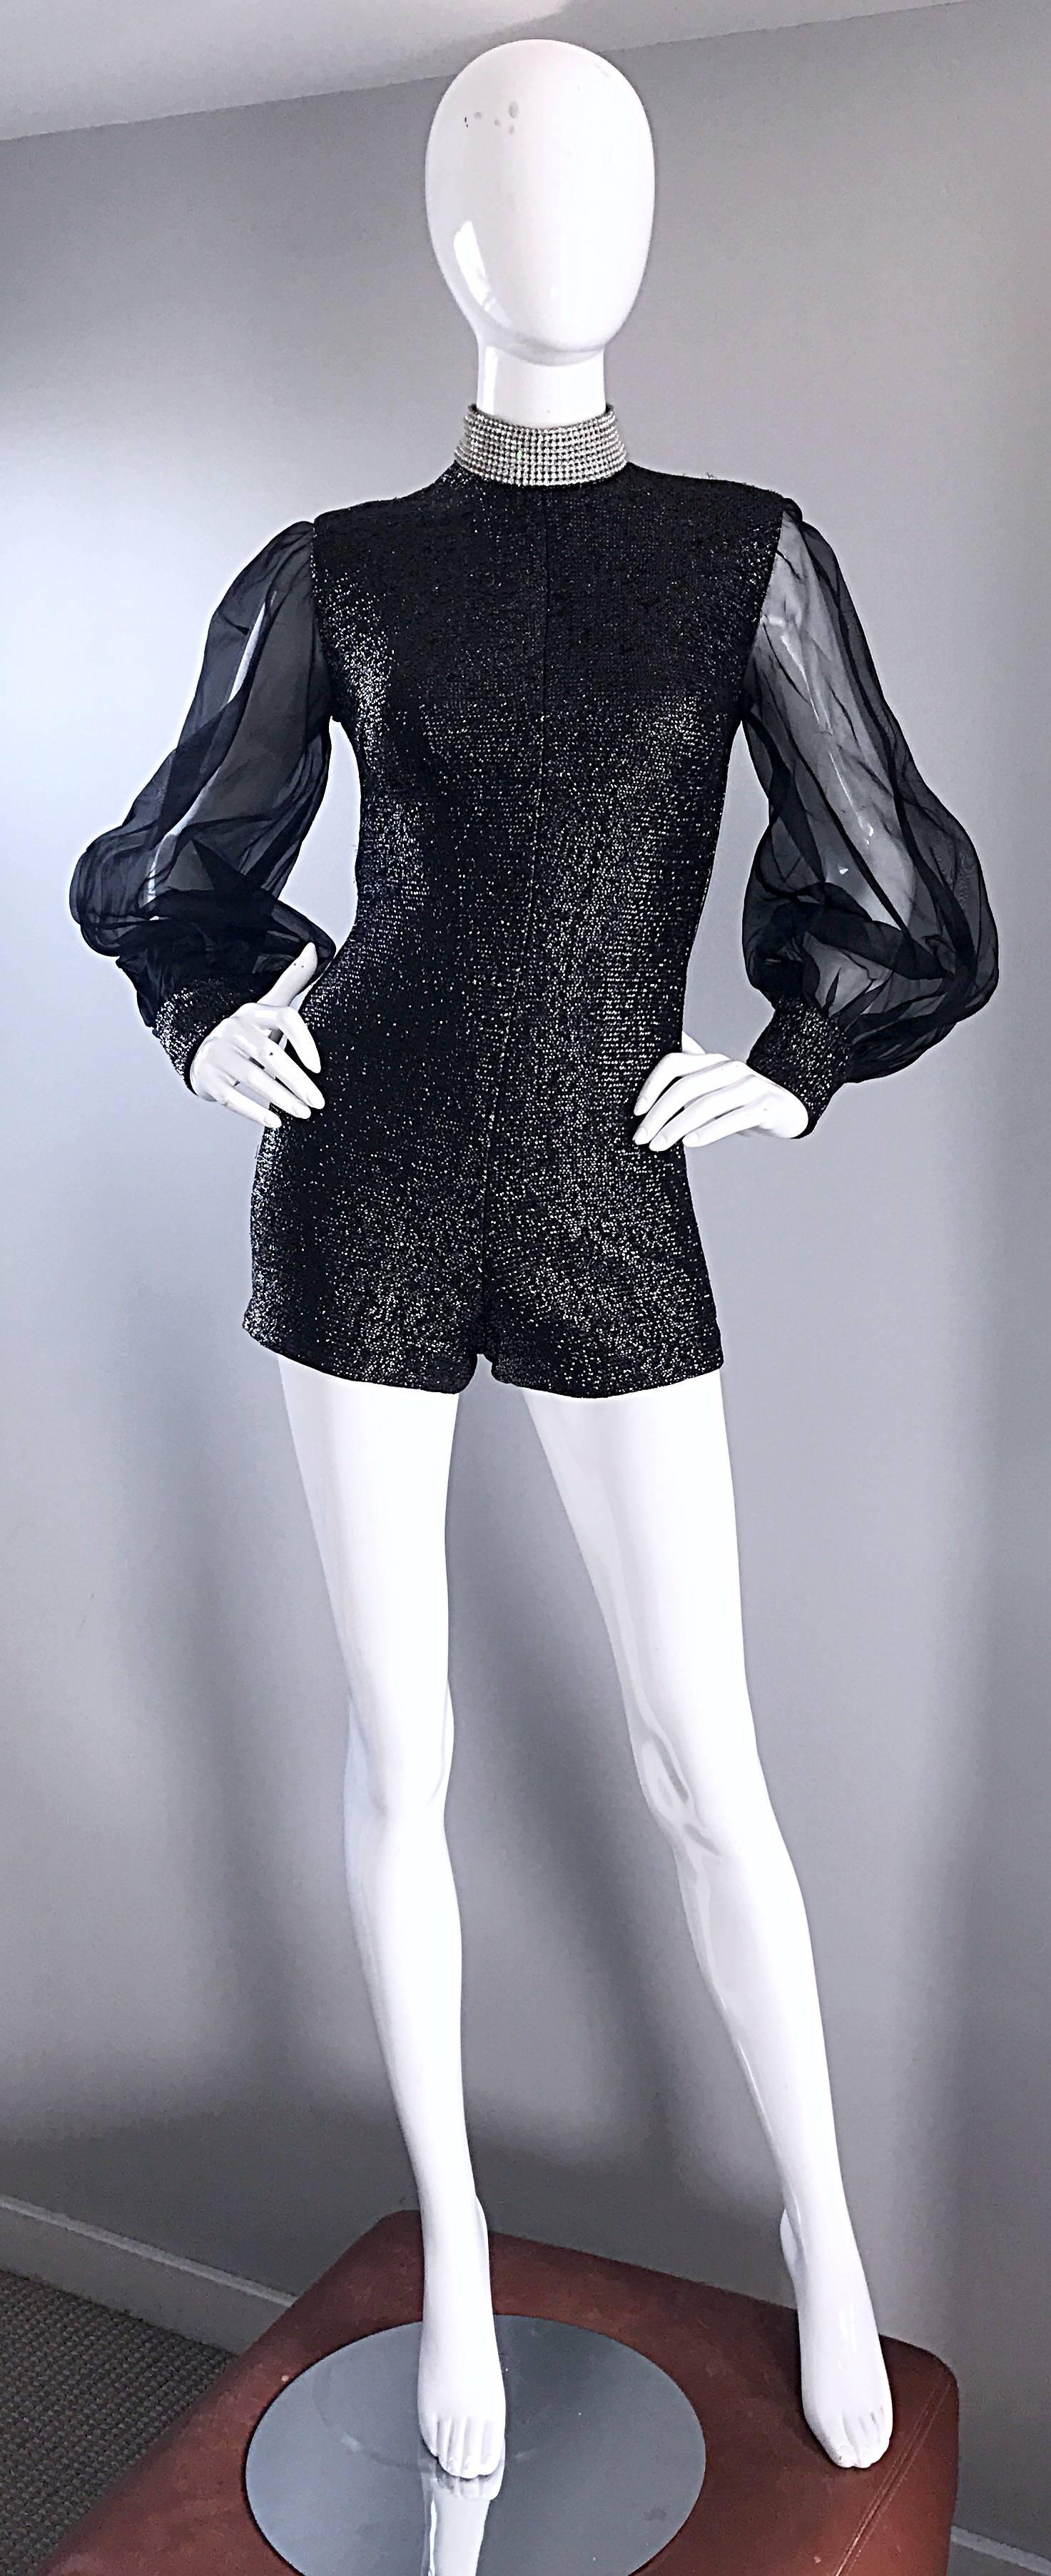 Absolutely sensational 1970s couture black metallic and chiffon rhinestone romper jumpsuit and ball skirt! Insane amount of hand-sewn workmanship throughout! Thick metallic lurex, with amazing full chiffon bishop sleeves. Rhinestone collar. Metallic